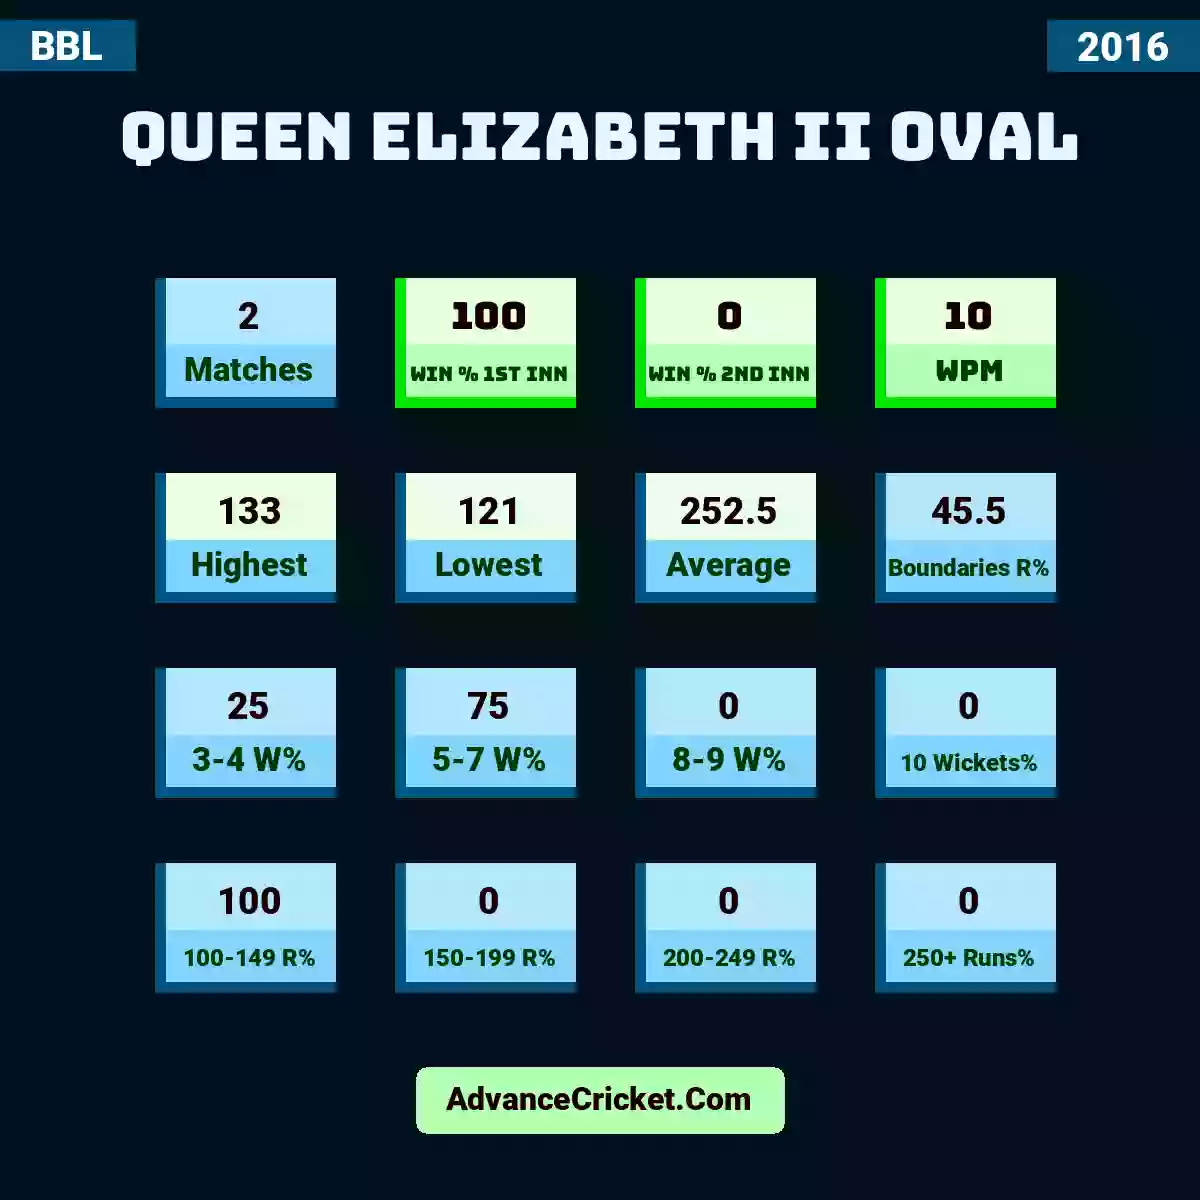 Image showing Queen Elizabeth II Oval with Matches: 2, Win % 1st Inn: 100, Win % 2nd Inn: 0, WPM: 10, Highest: 133, Lowest: 121, Average: 252.5, Boundaries R%: 45.5, 3-4 W%: 25, 5-7 W%: 75, 8-9 W%: 0, 10 Wickets%: 0, 100-149 R%: 100, 150-199 R%: 0, 200-249 R%: 0, 250+ Runs%: 0.